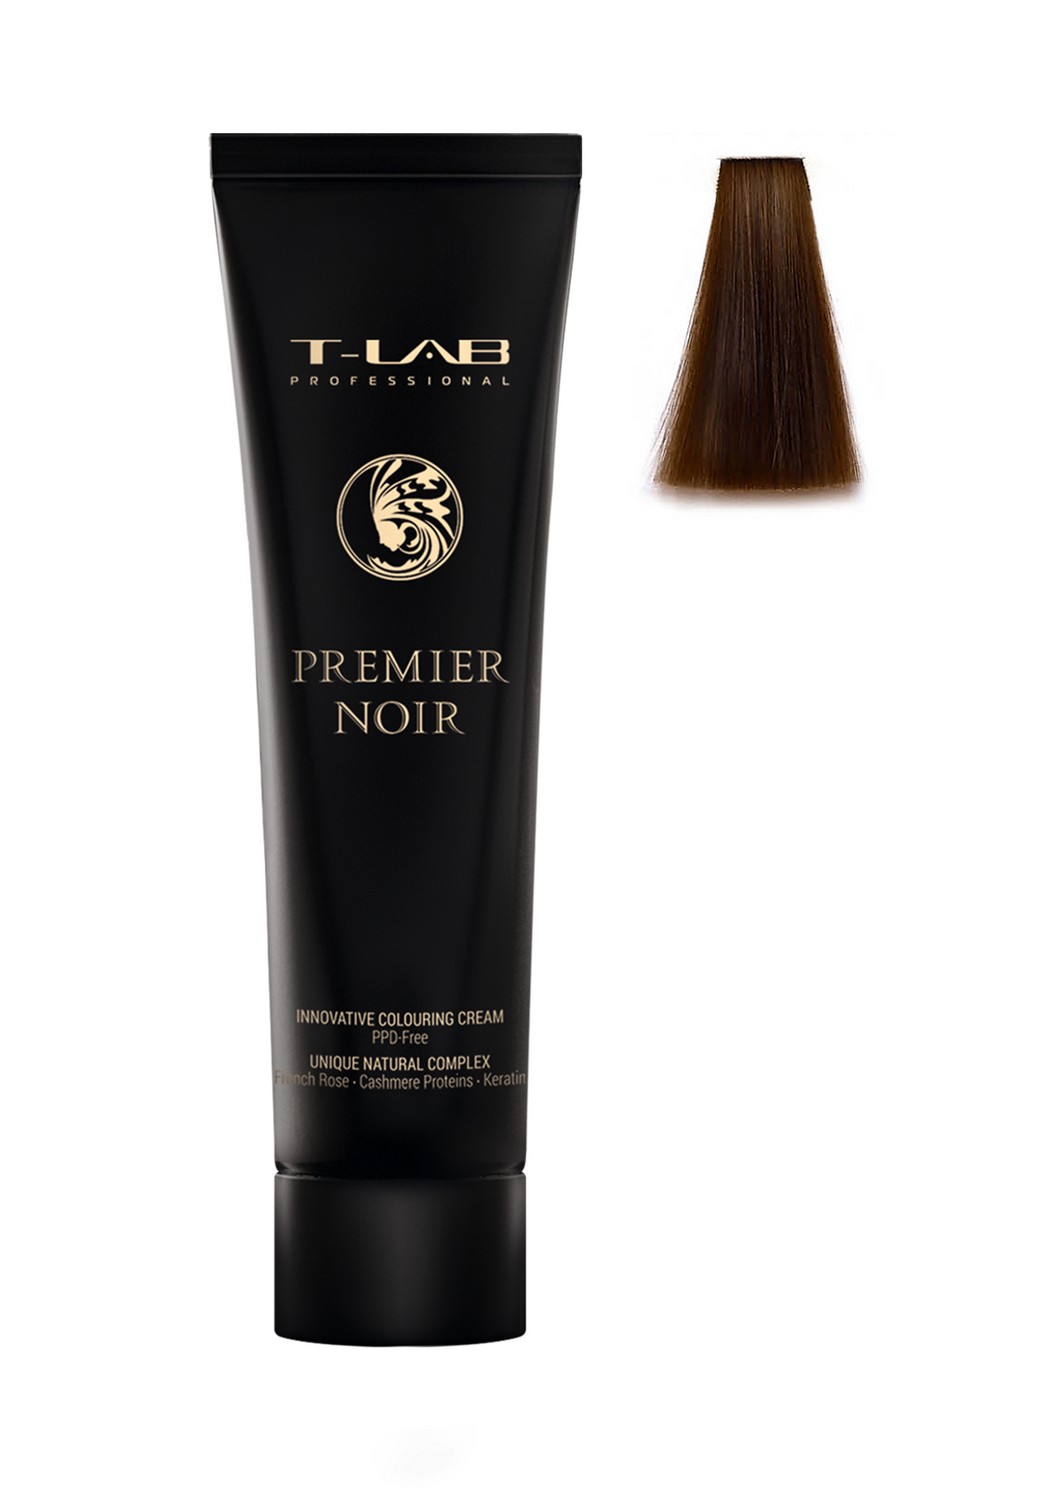 Крем-фарба T-LAB Professional Premier Noir colouring cream, відтінок 6.12 (dark ash iridescent blonde) - фото 2